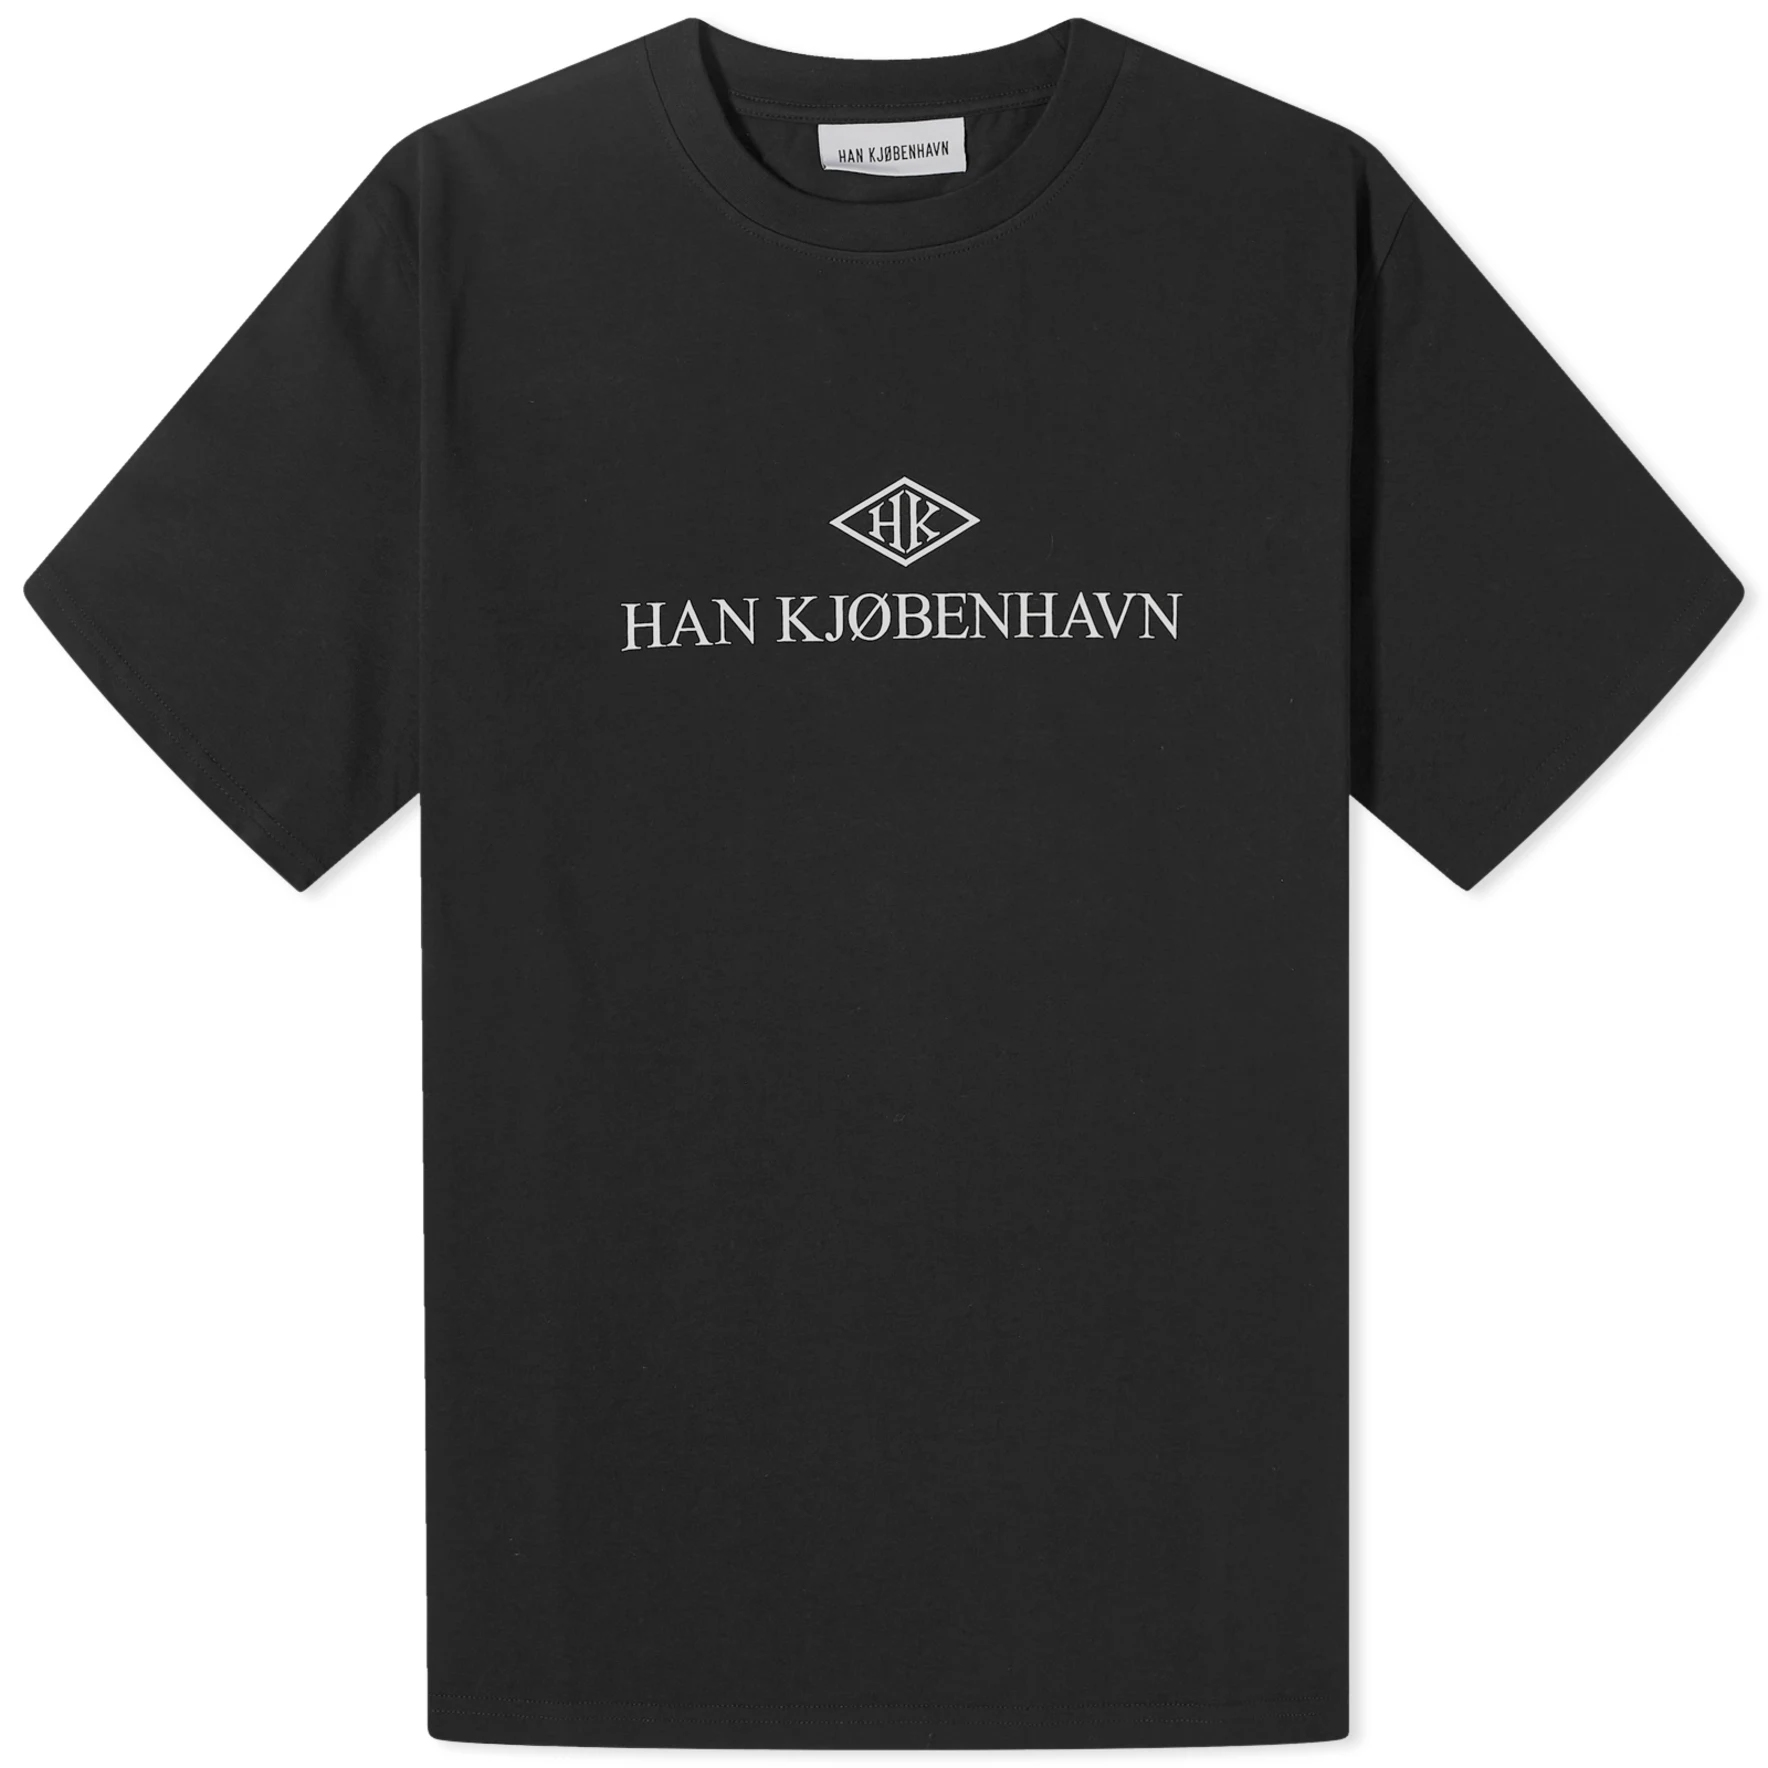 Футболка Han Kjobenhavn Hk Logo Boxy, черный футболка han kjobenhavn размер m белый